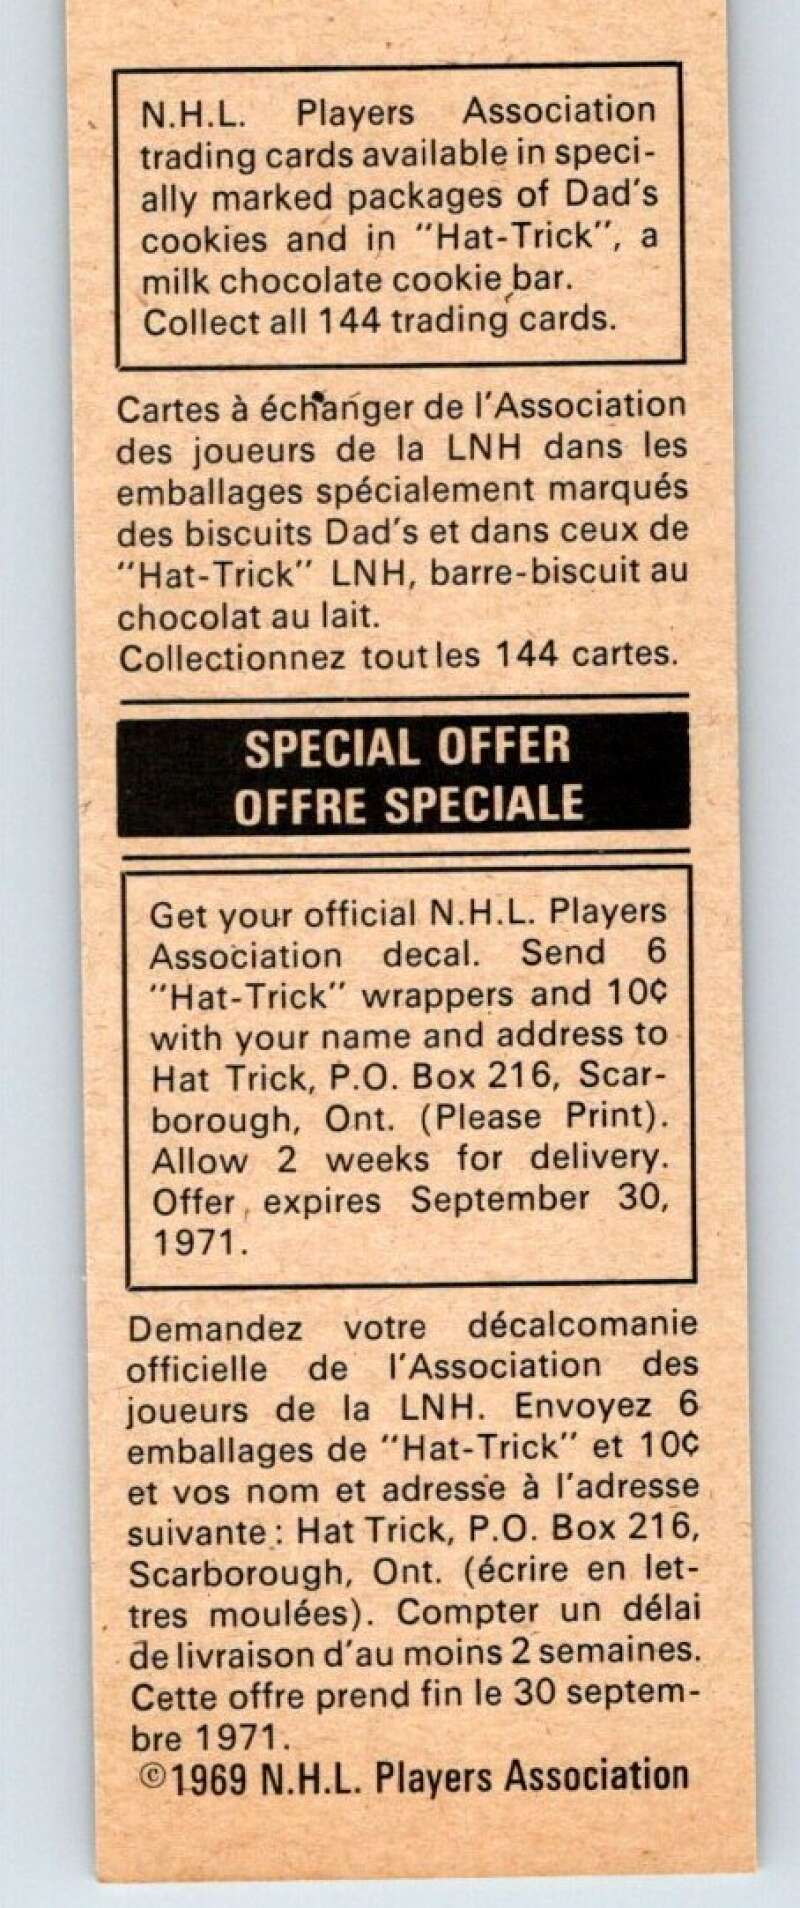 1970-71 Dad's Cookies #136 Mike Walton  Toronto Maple Leafs  X421